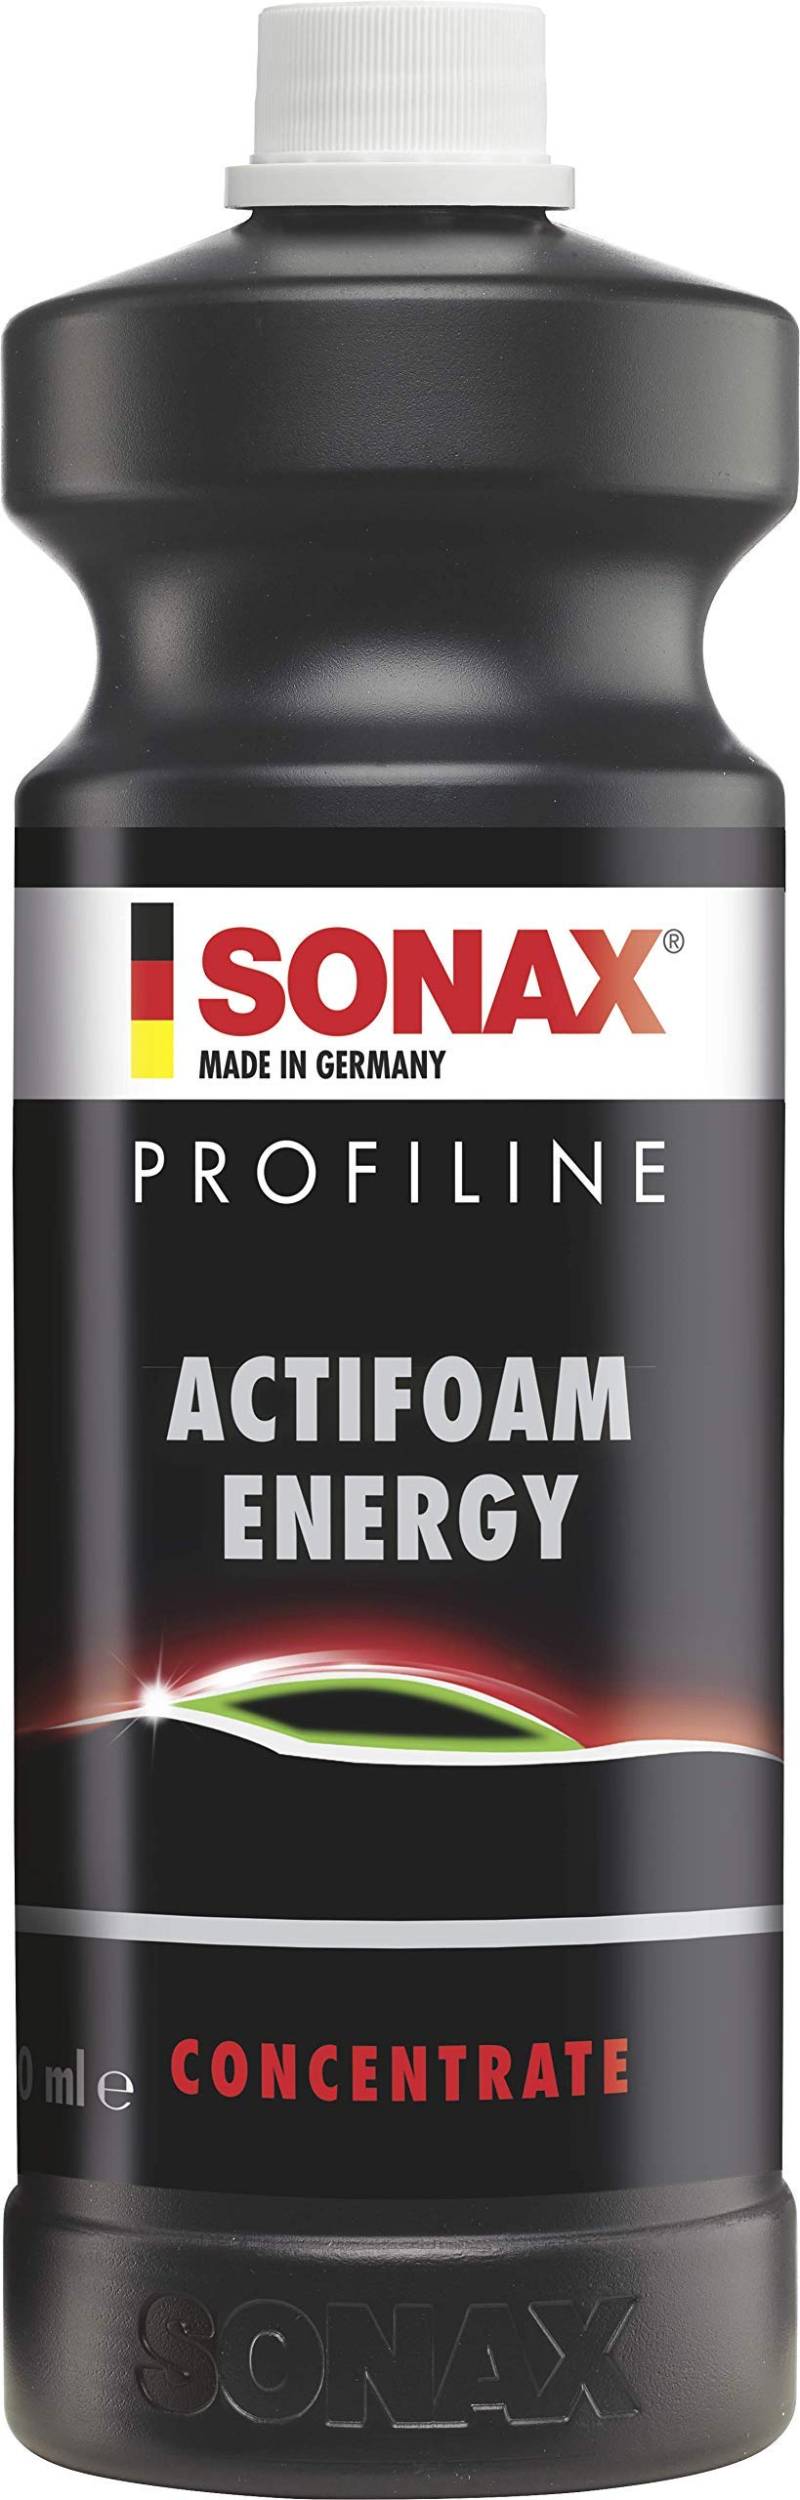 SONAX 618300 Profiline ActiFoam 1L von SONAX